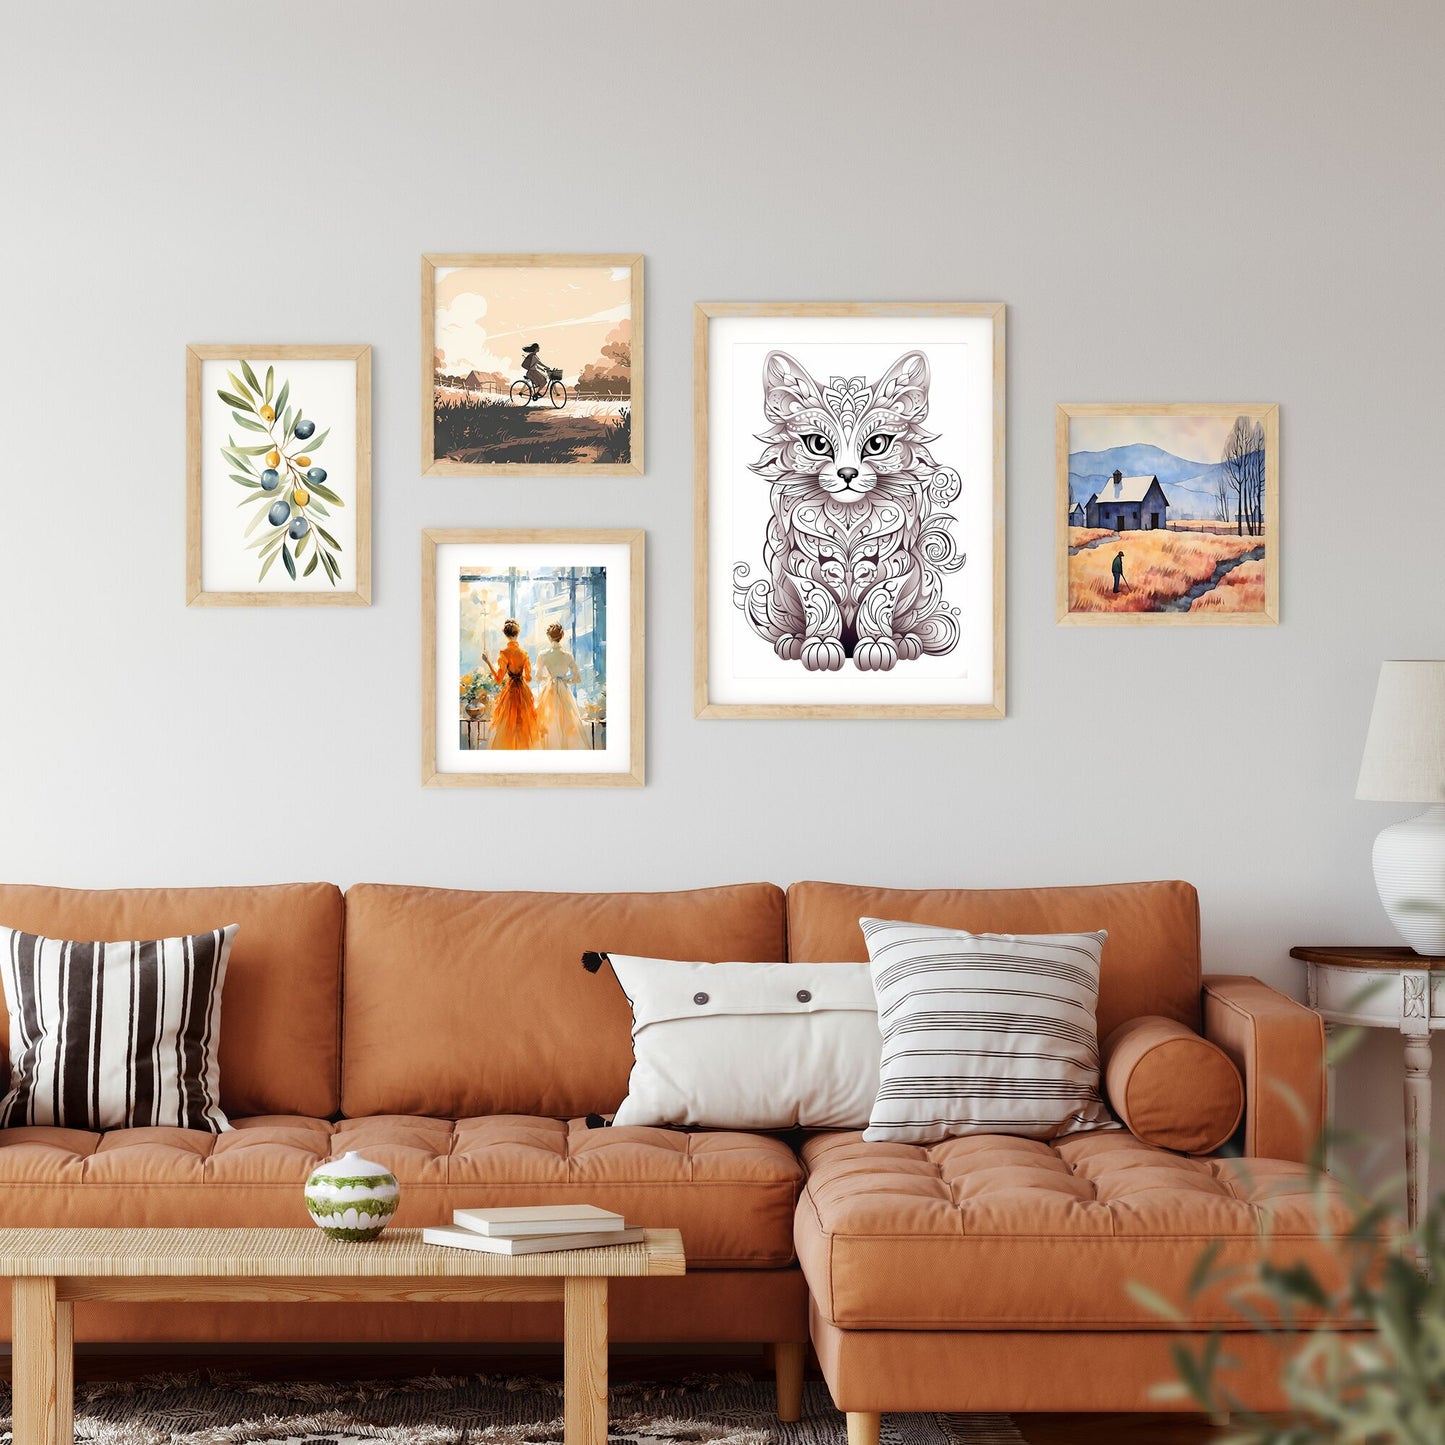 Cat With Ornate Patterns Art Print Default Title